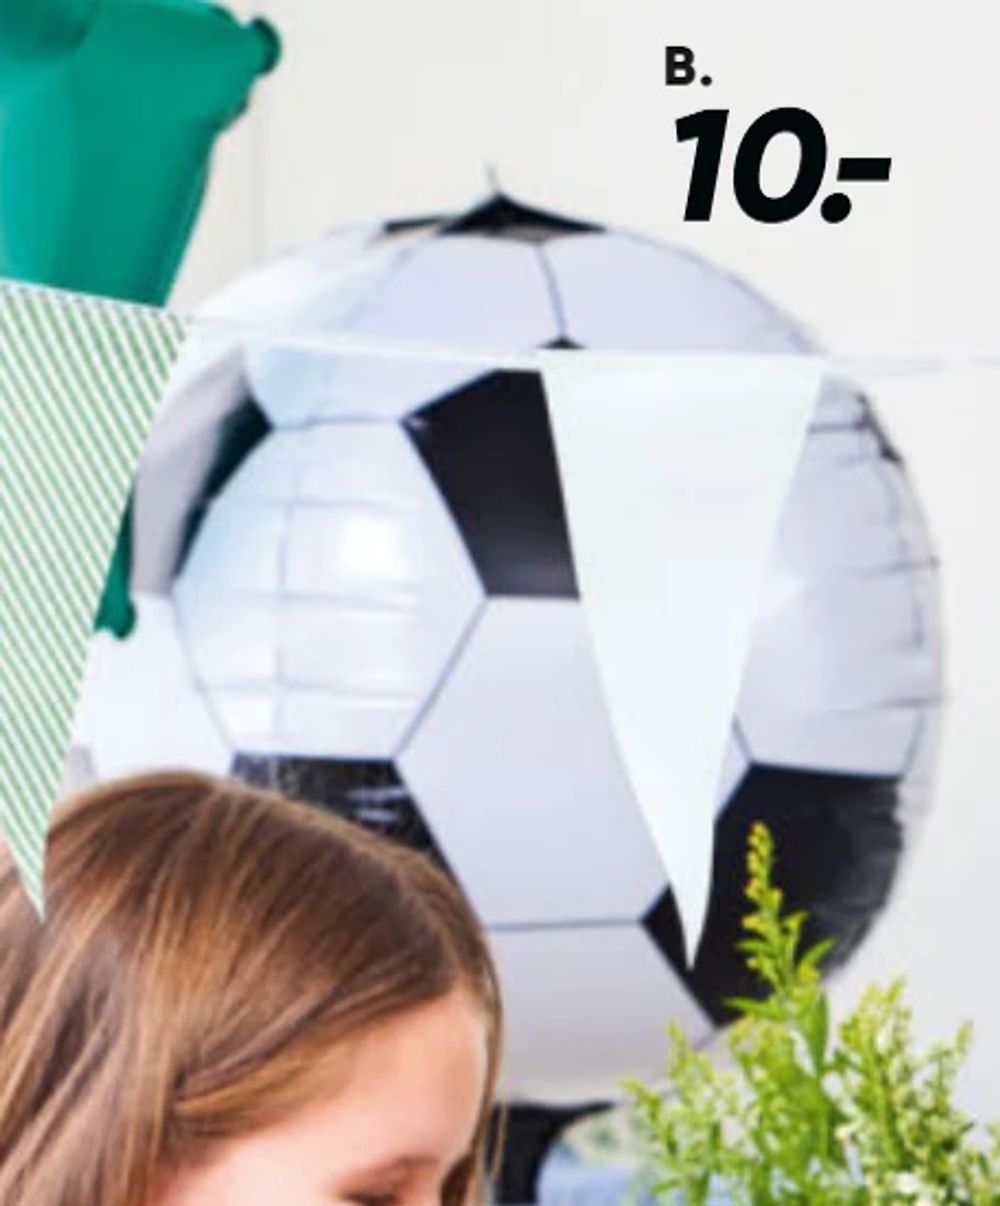 Tilbud på Fodbold-folieballon fra Bilka til 10 kr.